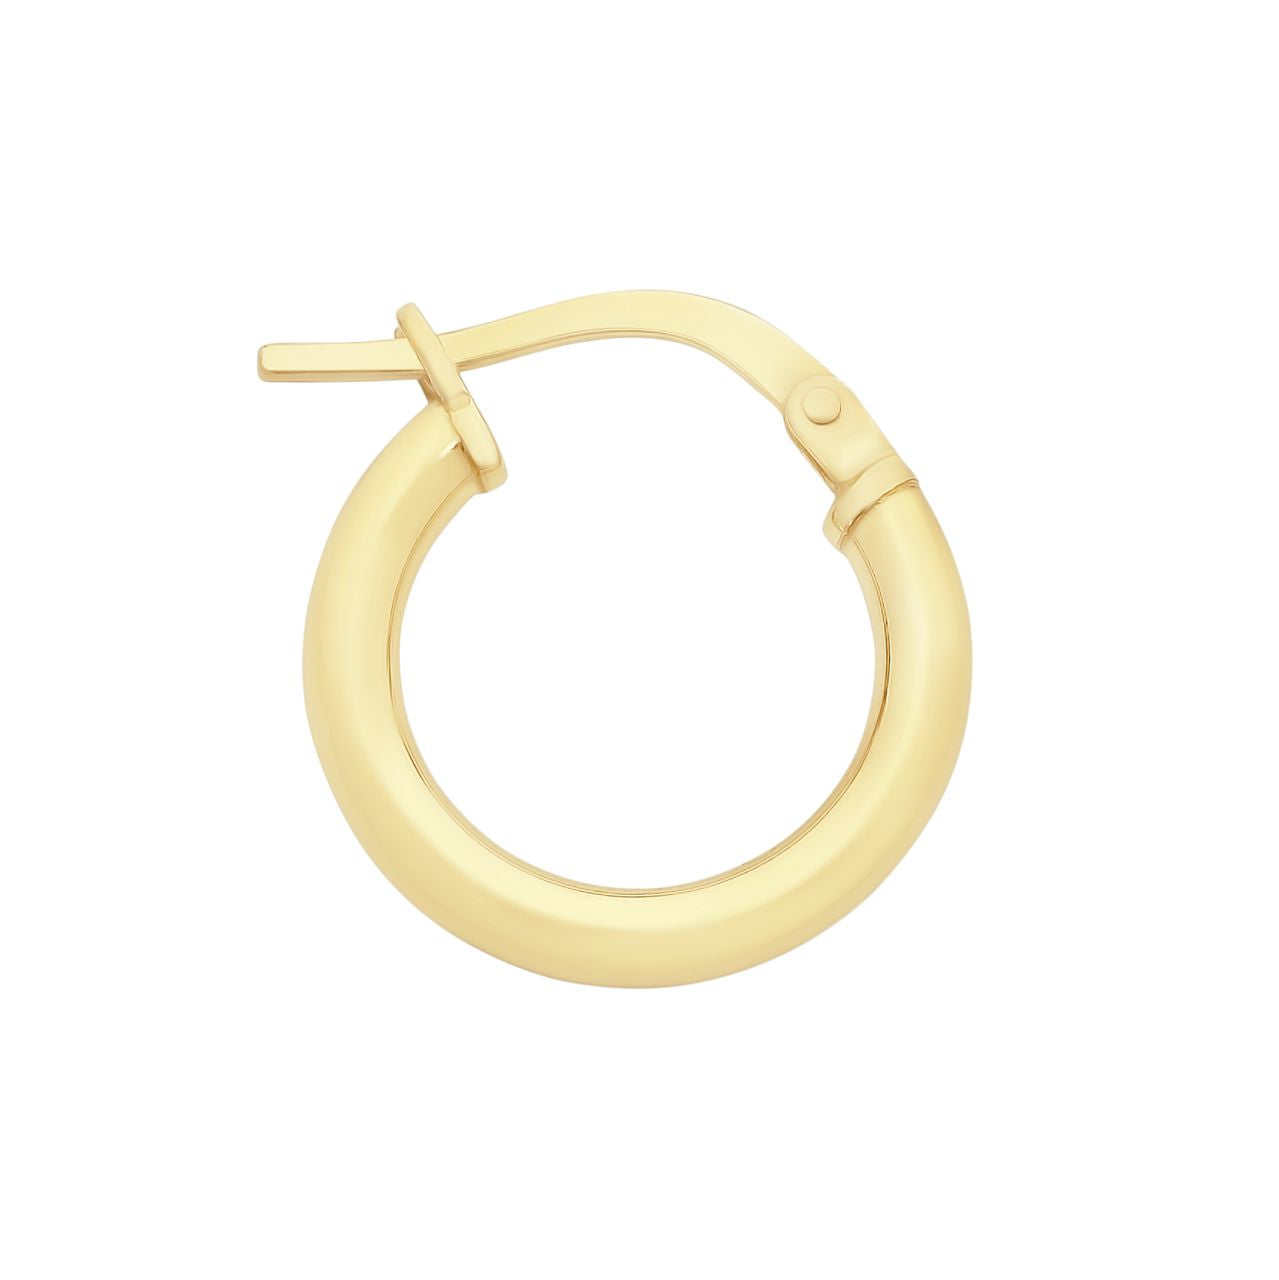 SINGLE 9ct Yellow Gold Tube Hoop Earring.